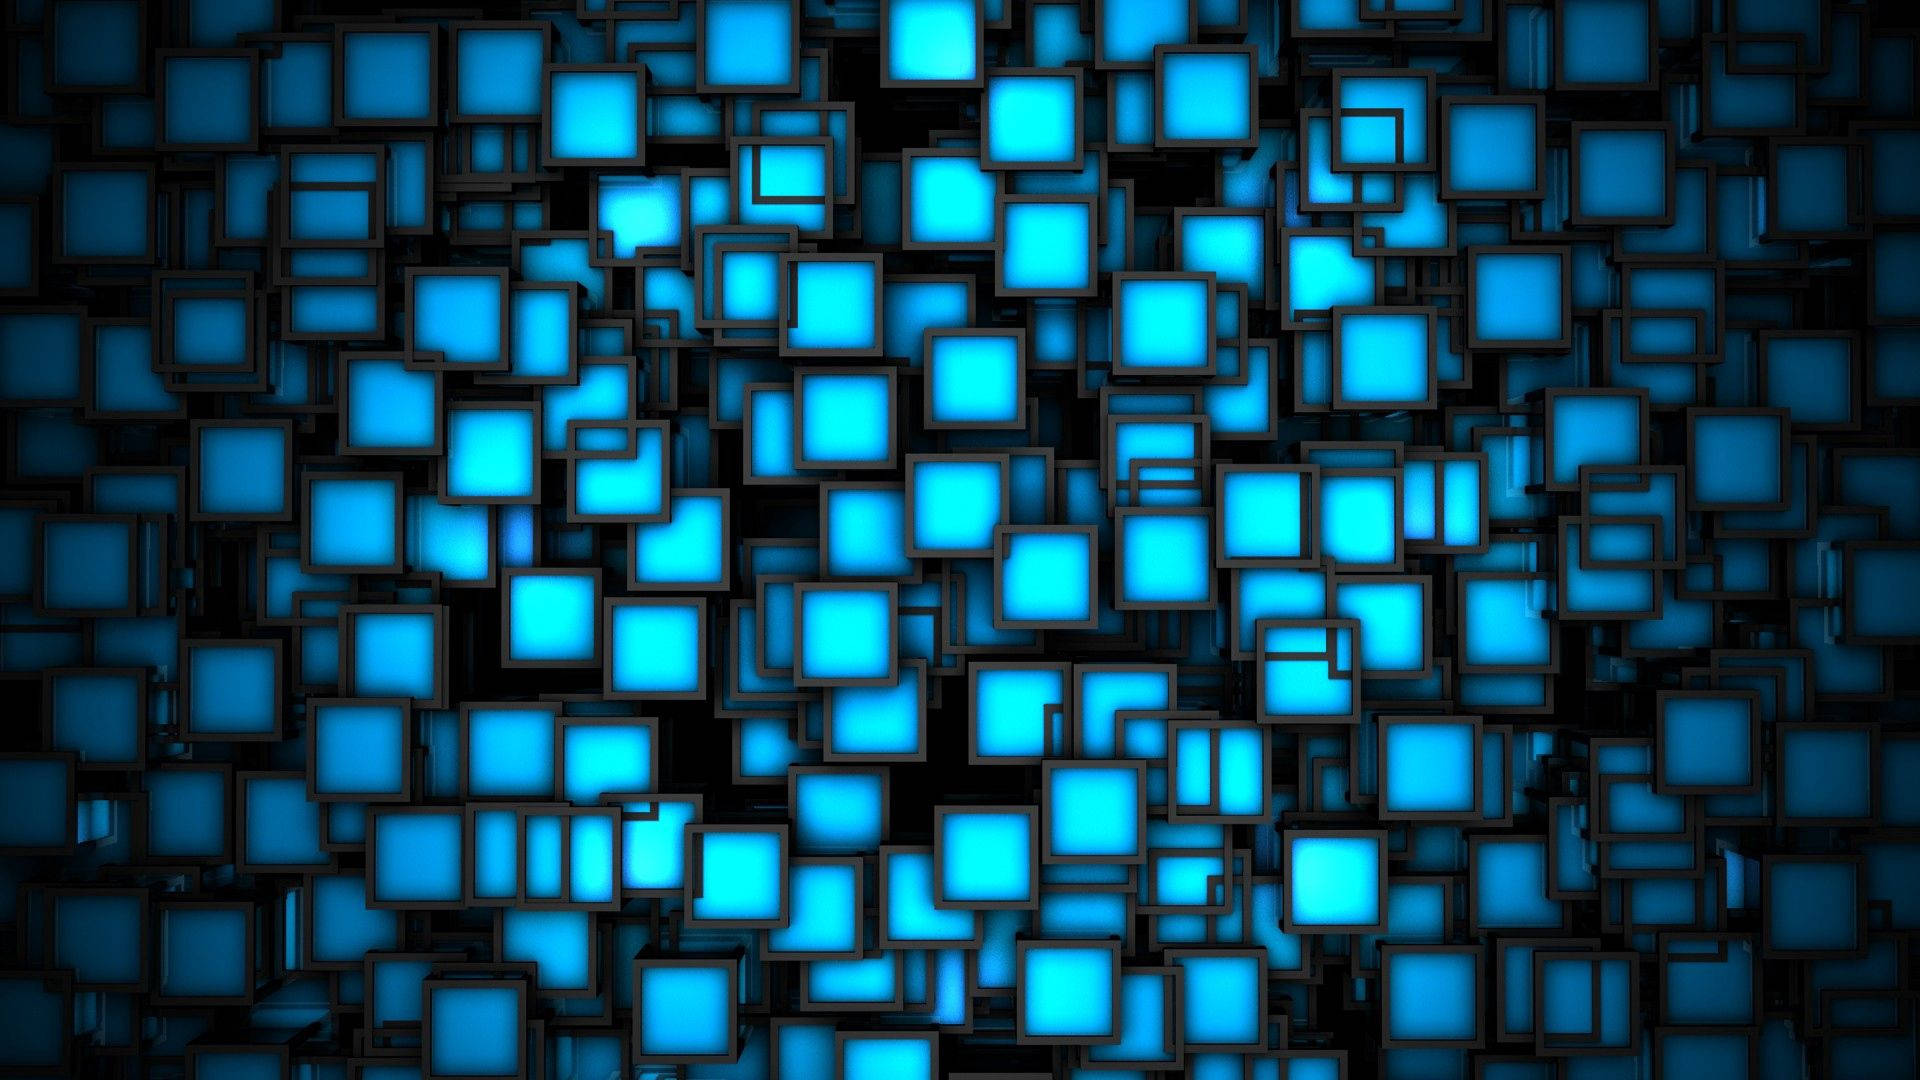 3D bright blue squares in black wallpaper.